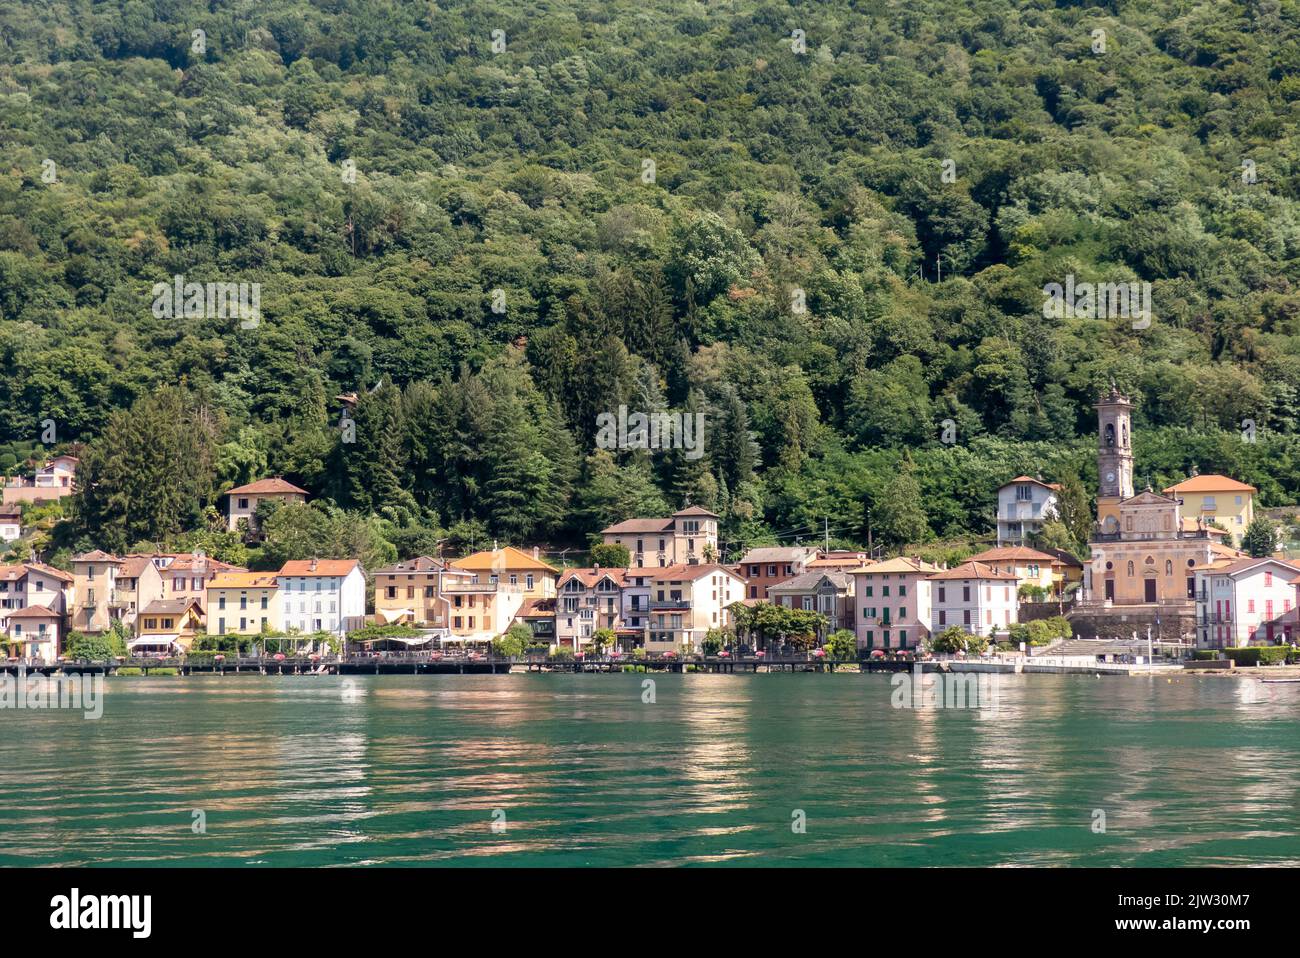 Verese in Italy: the town of Porto Ceresio on the shores of Lake Lugano Stock Photo